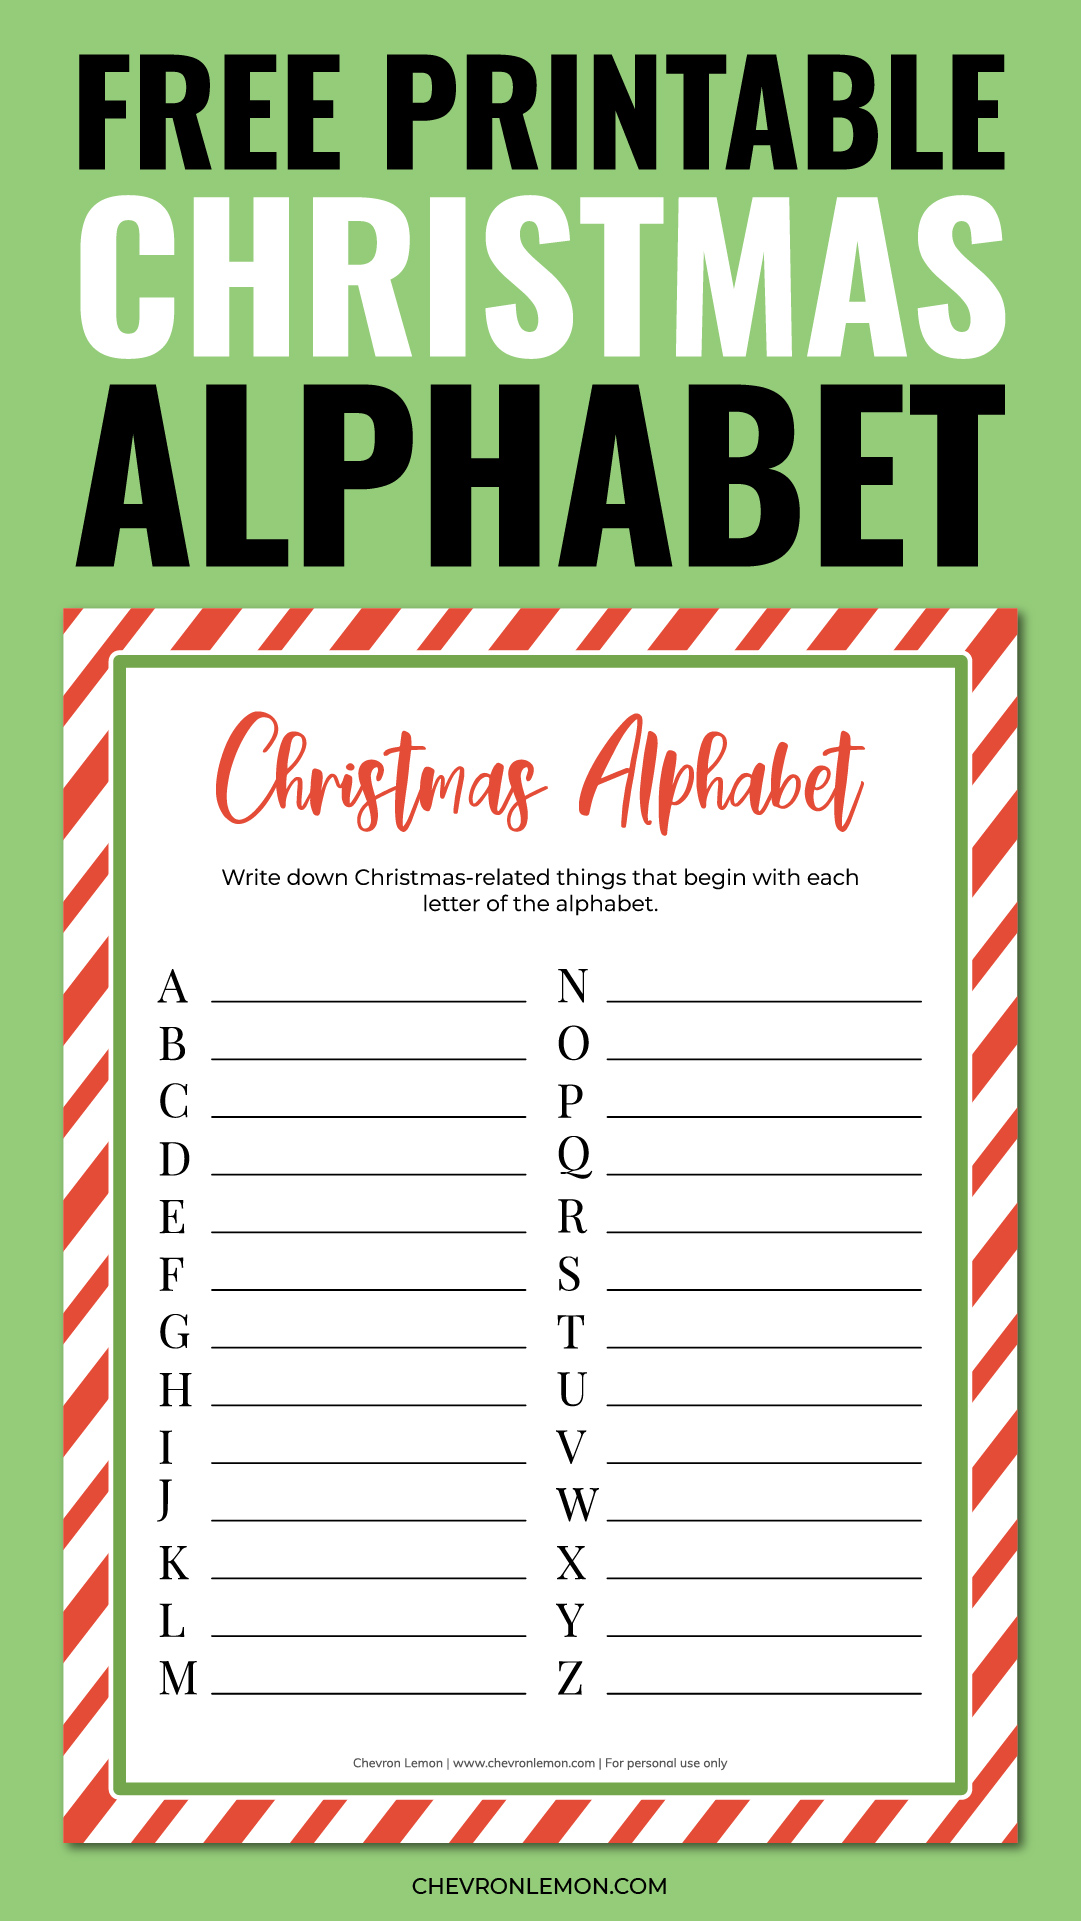 Printable Christmas alphabet